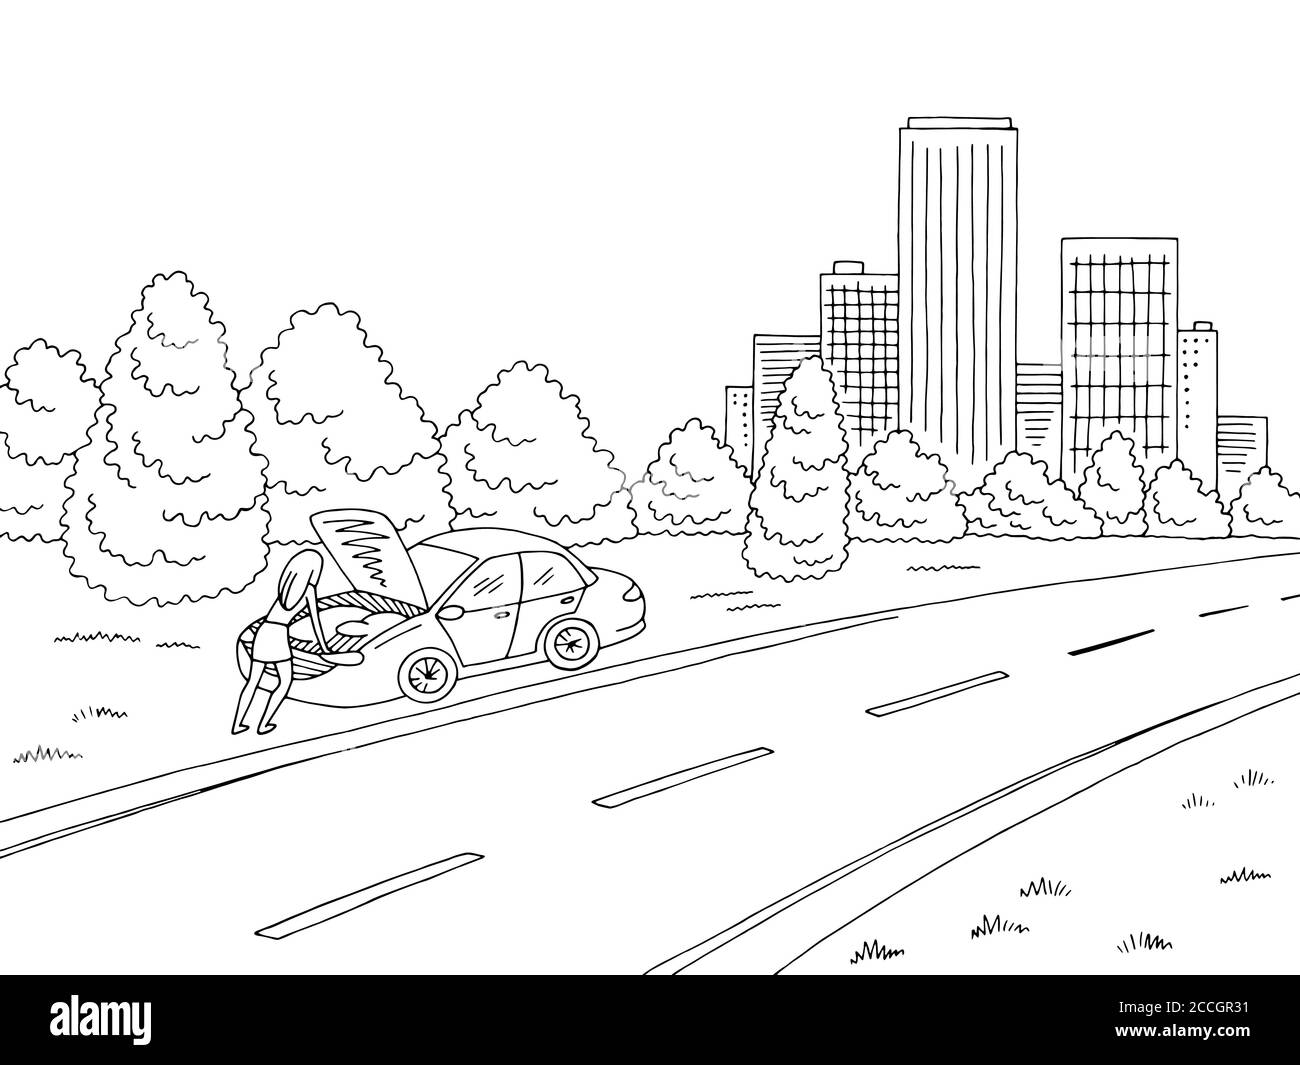 Broken car graphic black white road landscape city sketch illustration vector. Woman standing Stock Vector